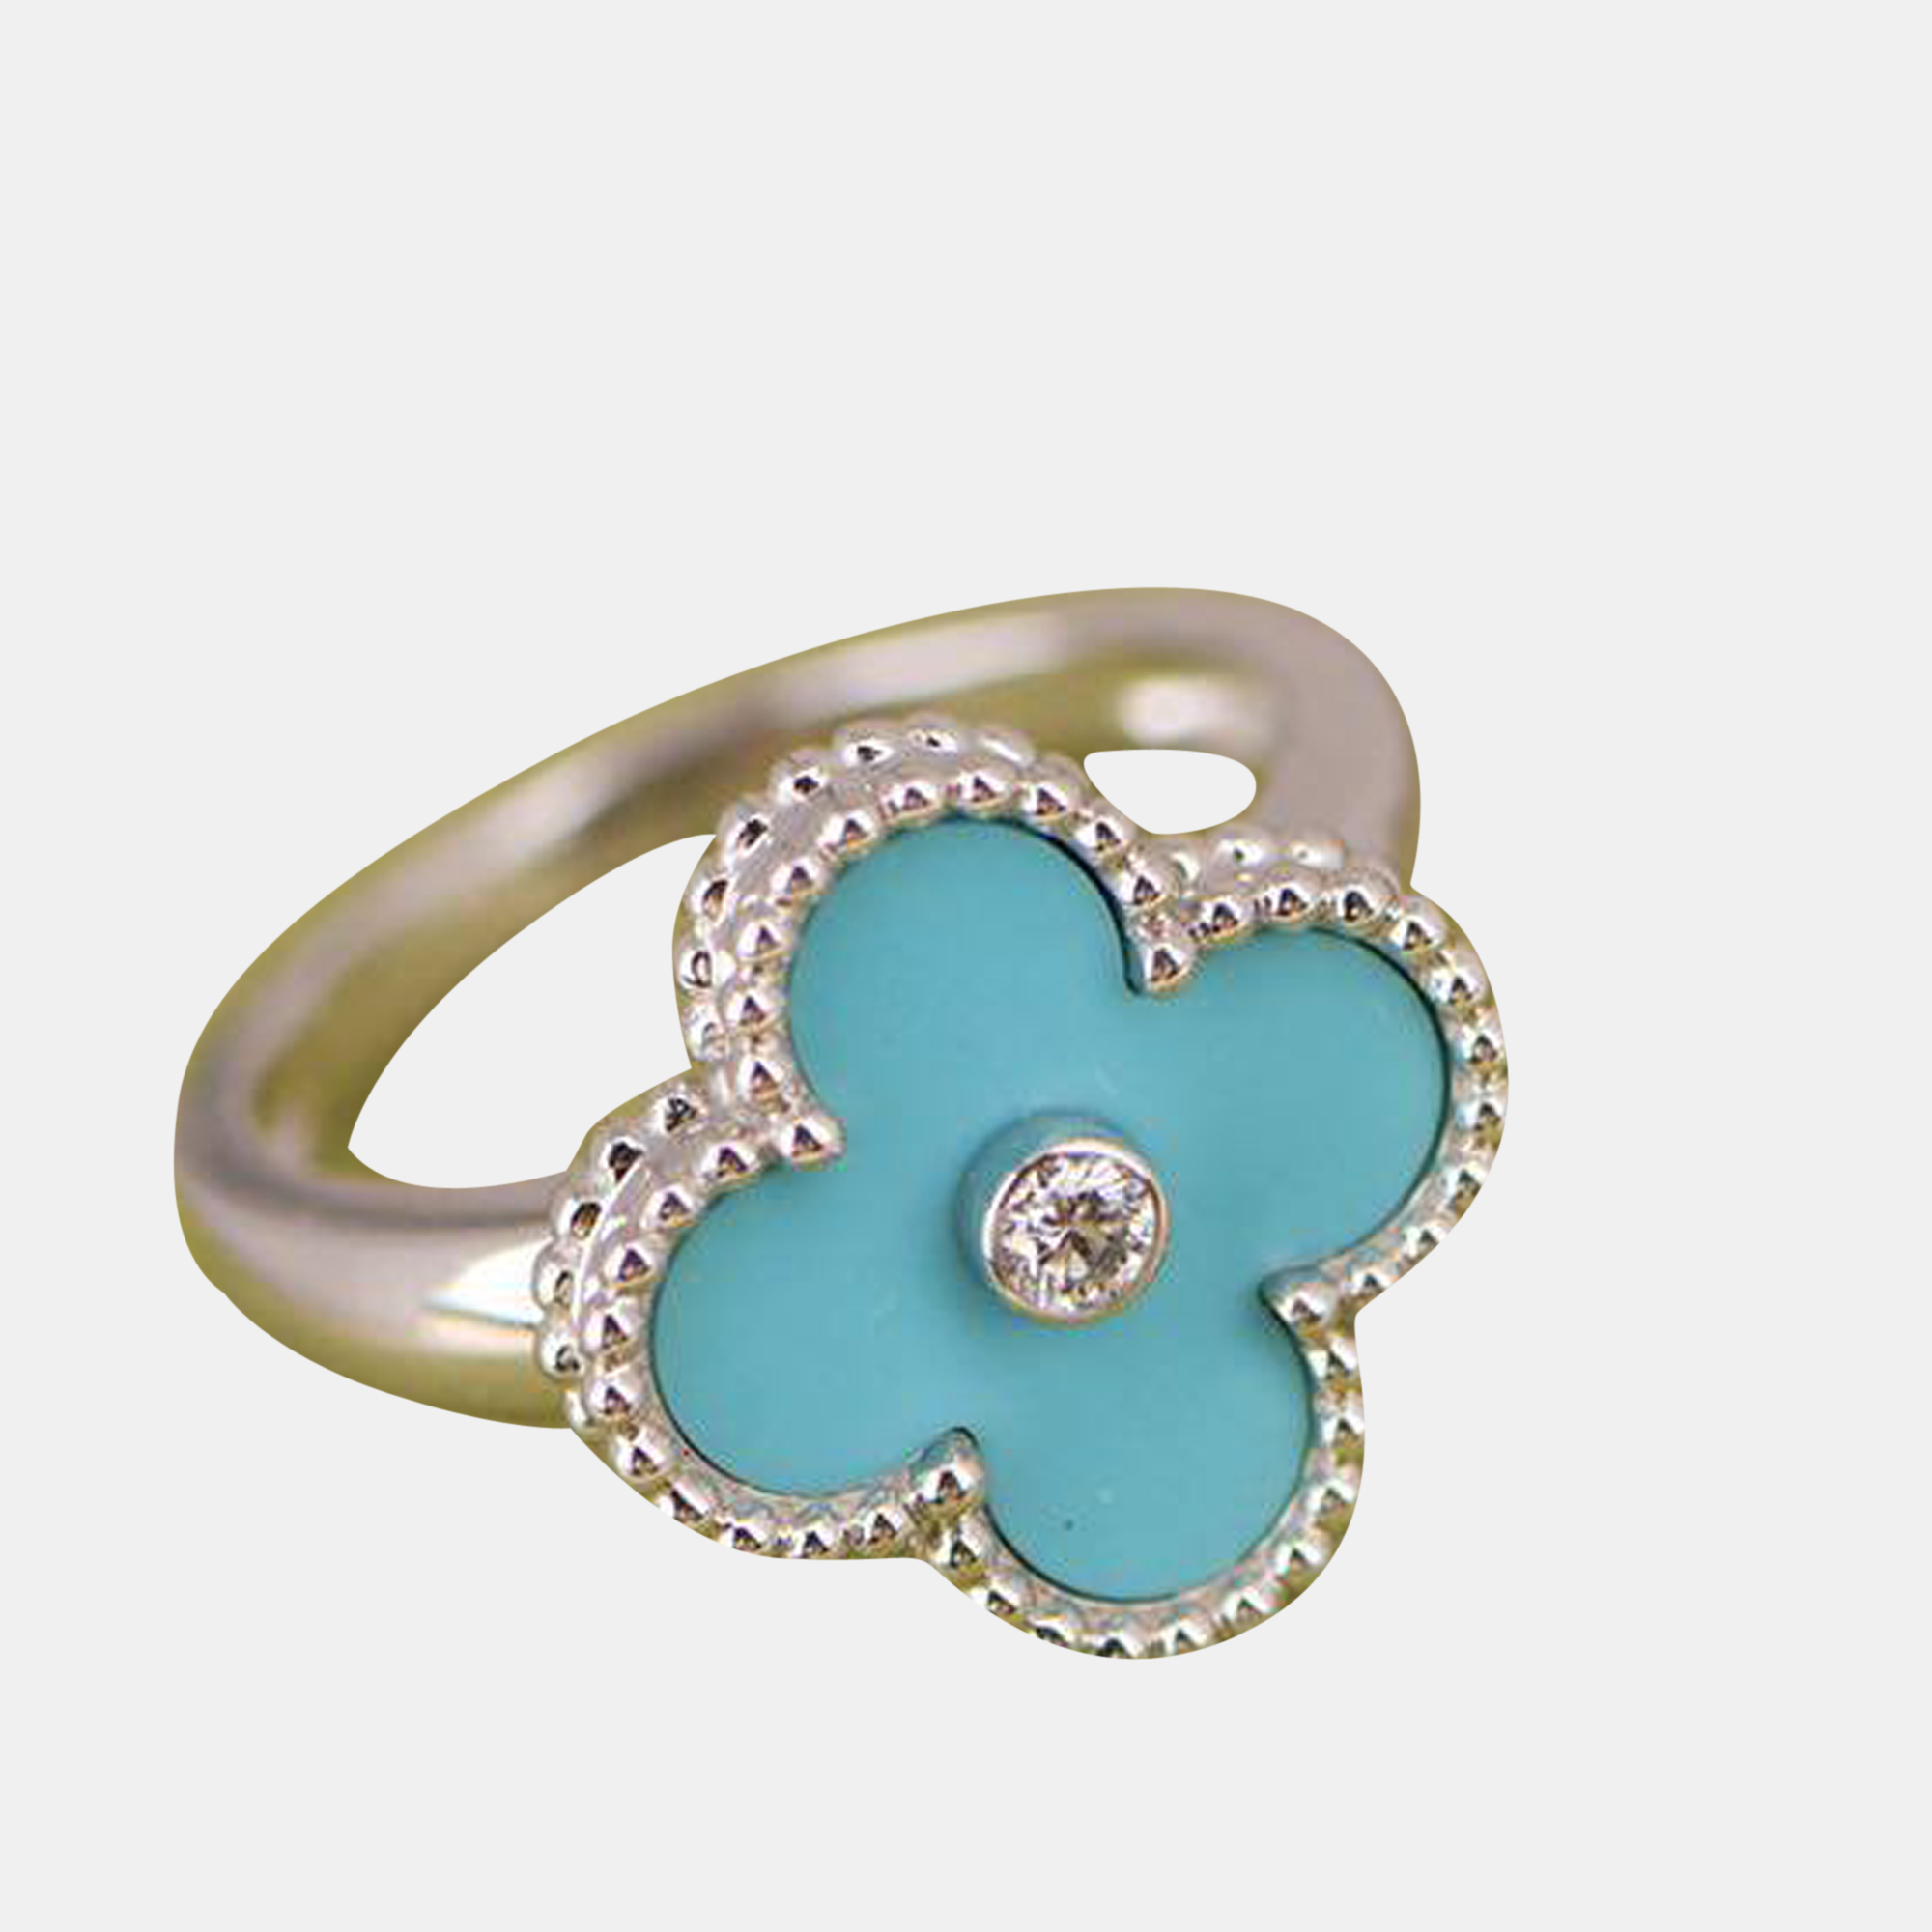 Van Cleef & Arpels Alhambra Turquoise White Gold Diamond Ring